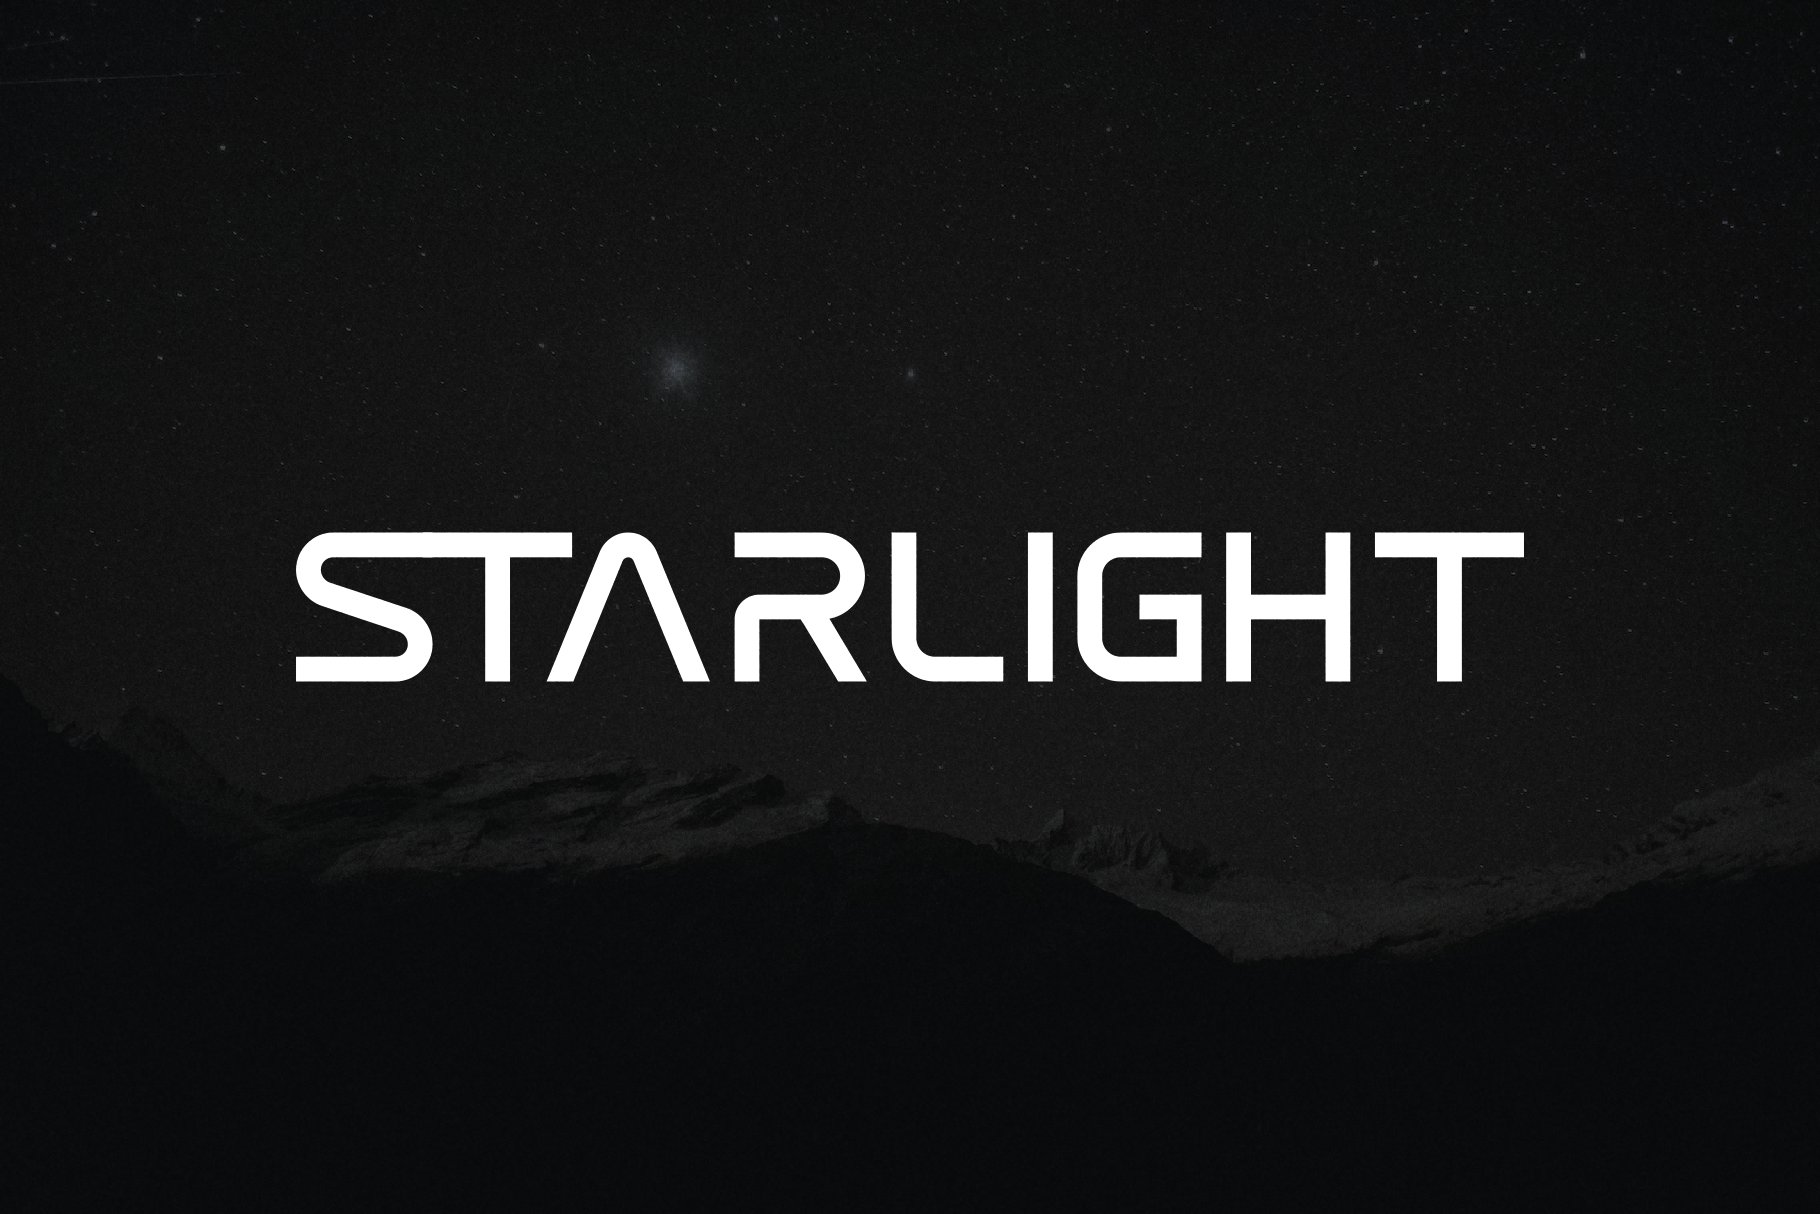 Starlight cover image.